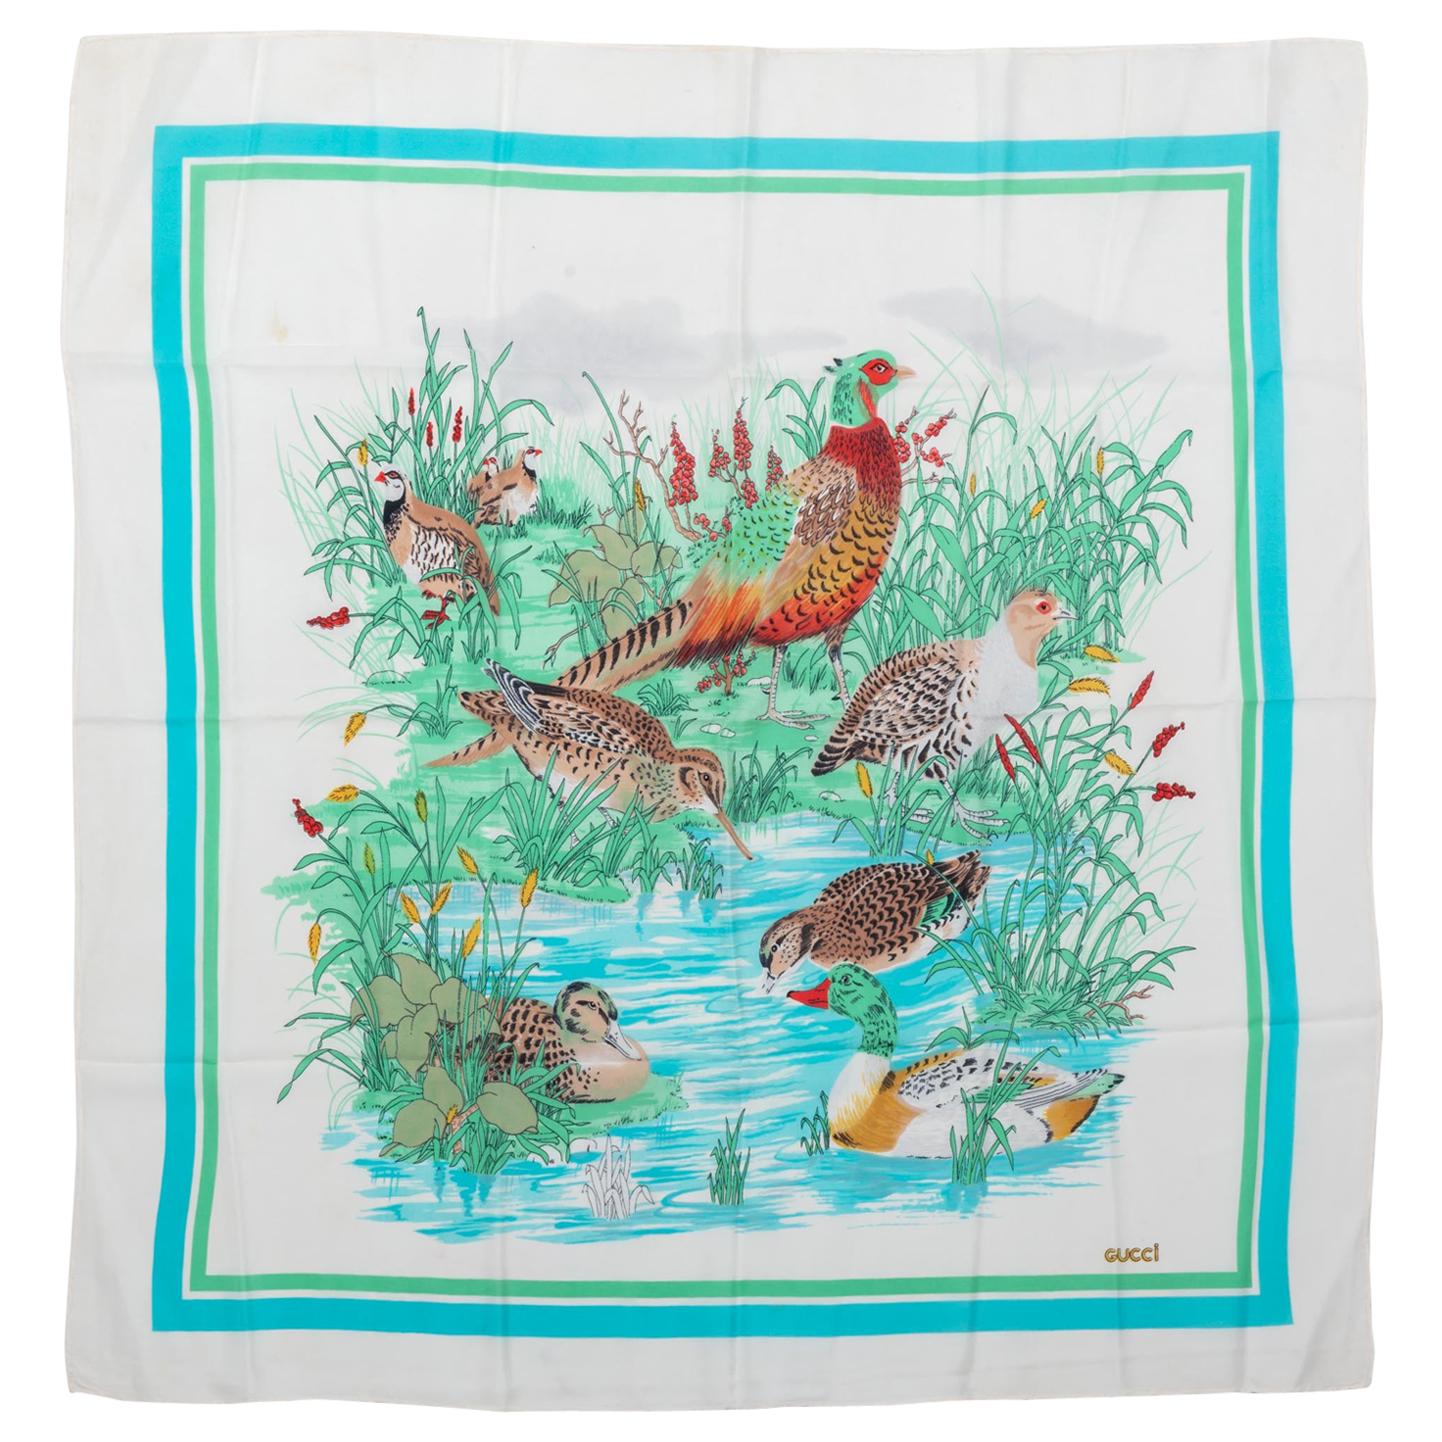 Gucci Bird - 19 For Sale on 1stDibs | gucci bird bag, gucci birds